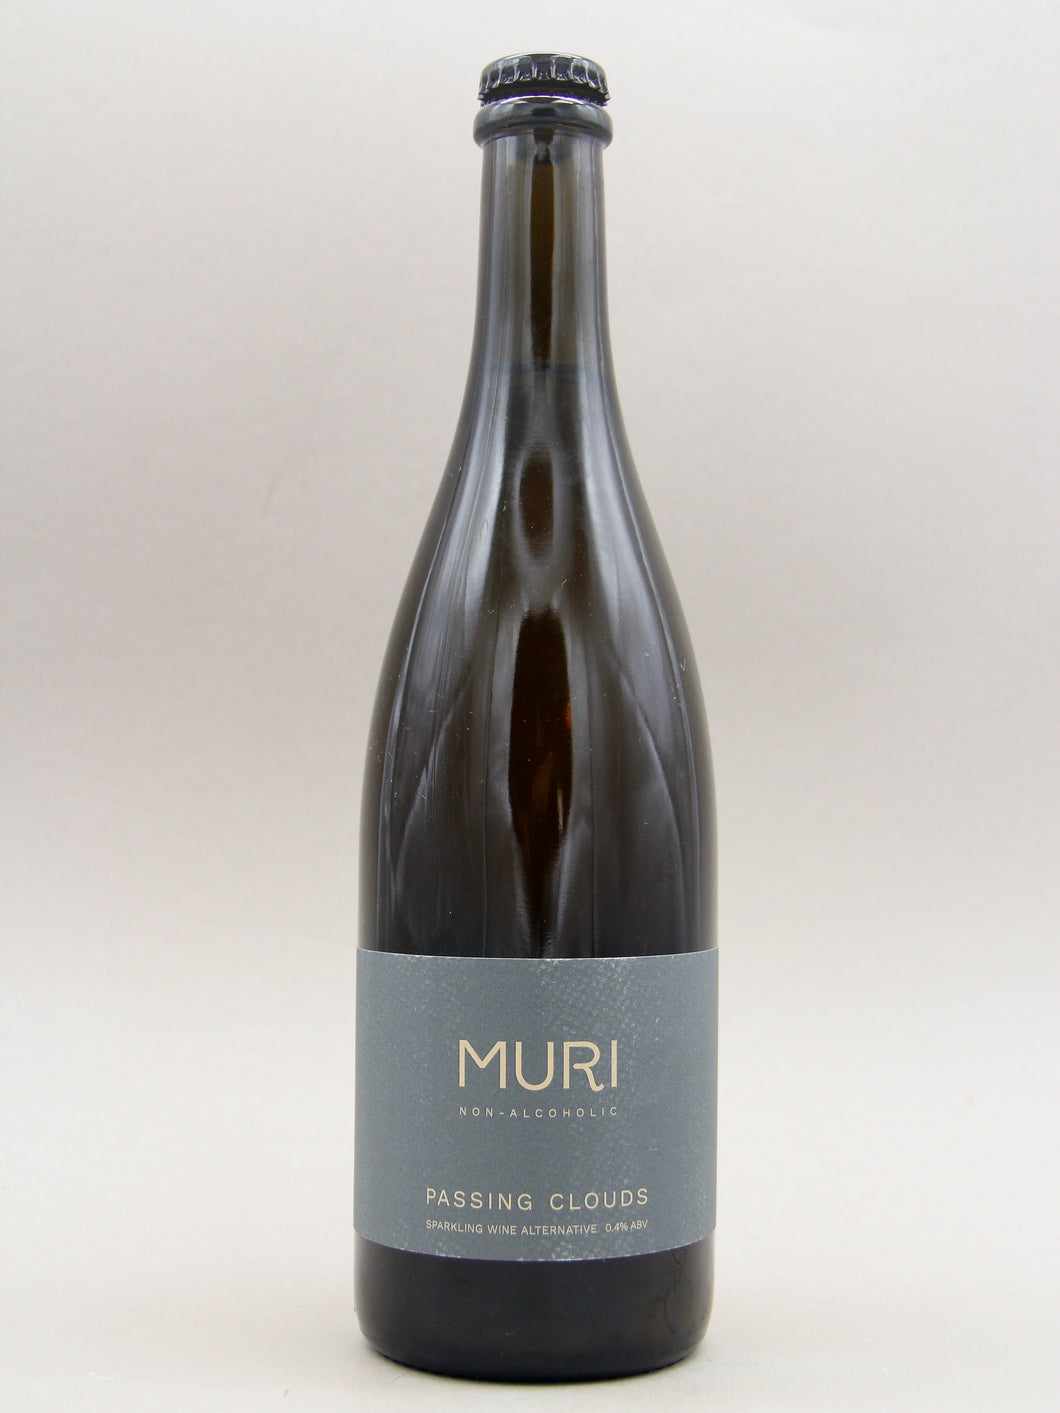 Muri, Passing Clouds, Non-Alc Sparkling Wine Alternative (0.4%, 75cl)